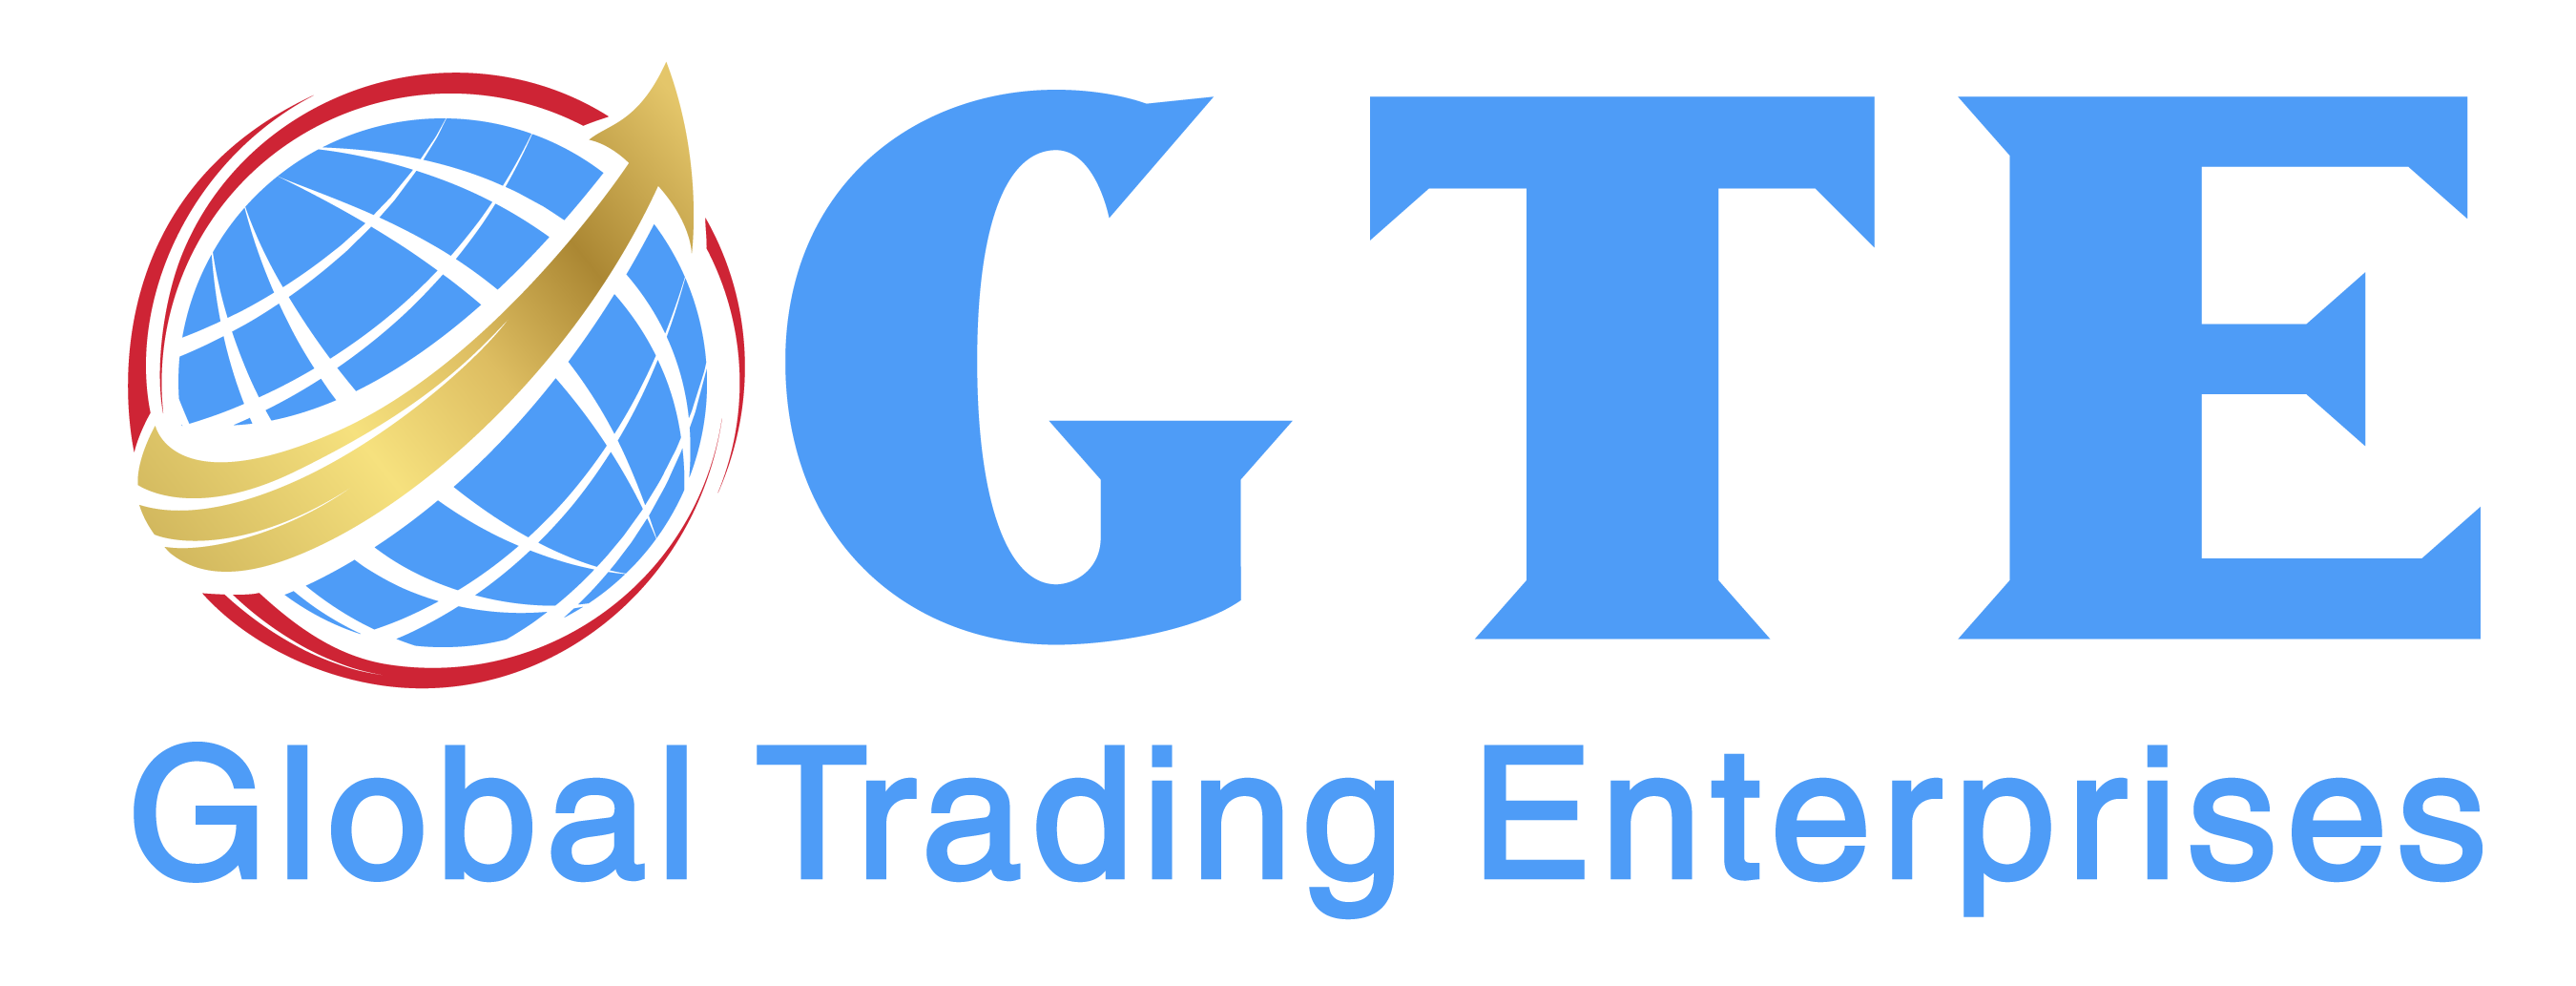 Global Trading Enterprises